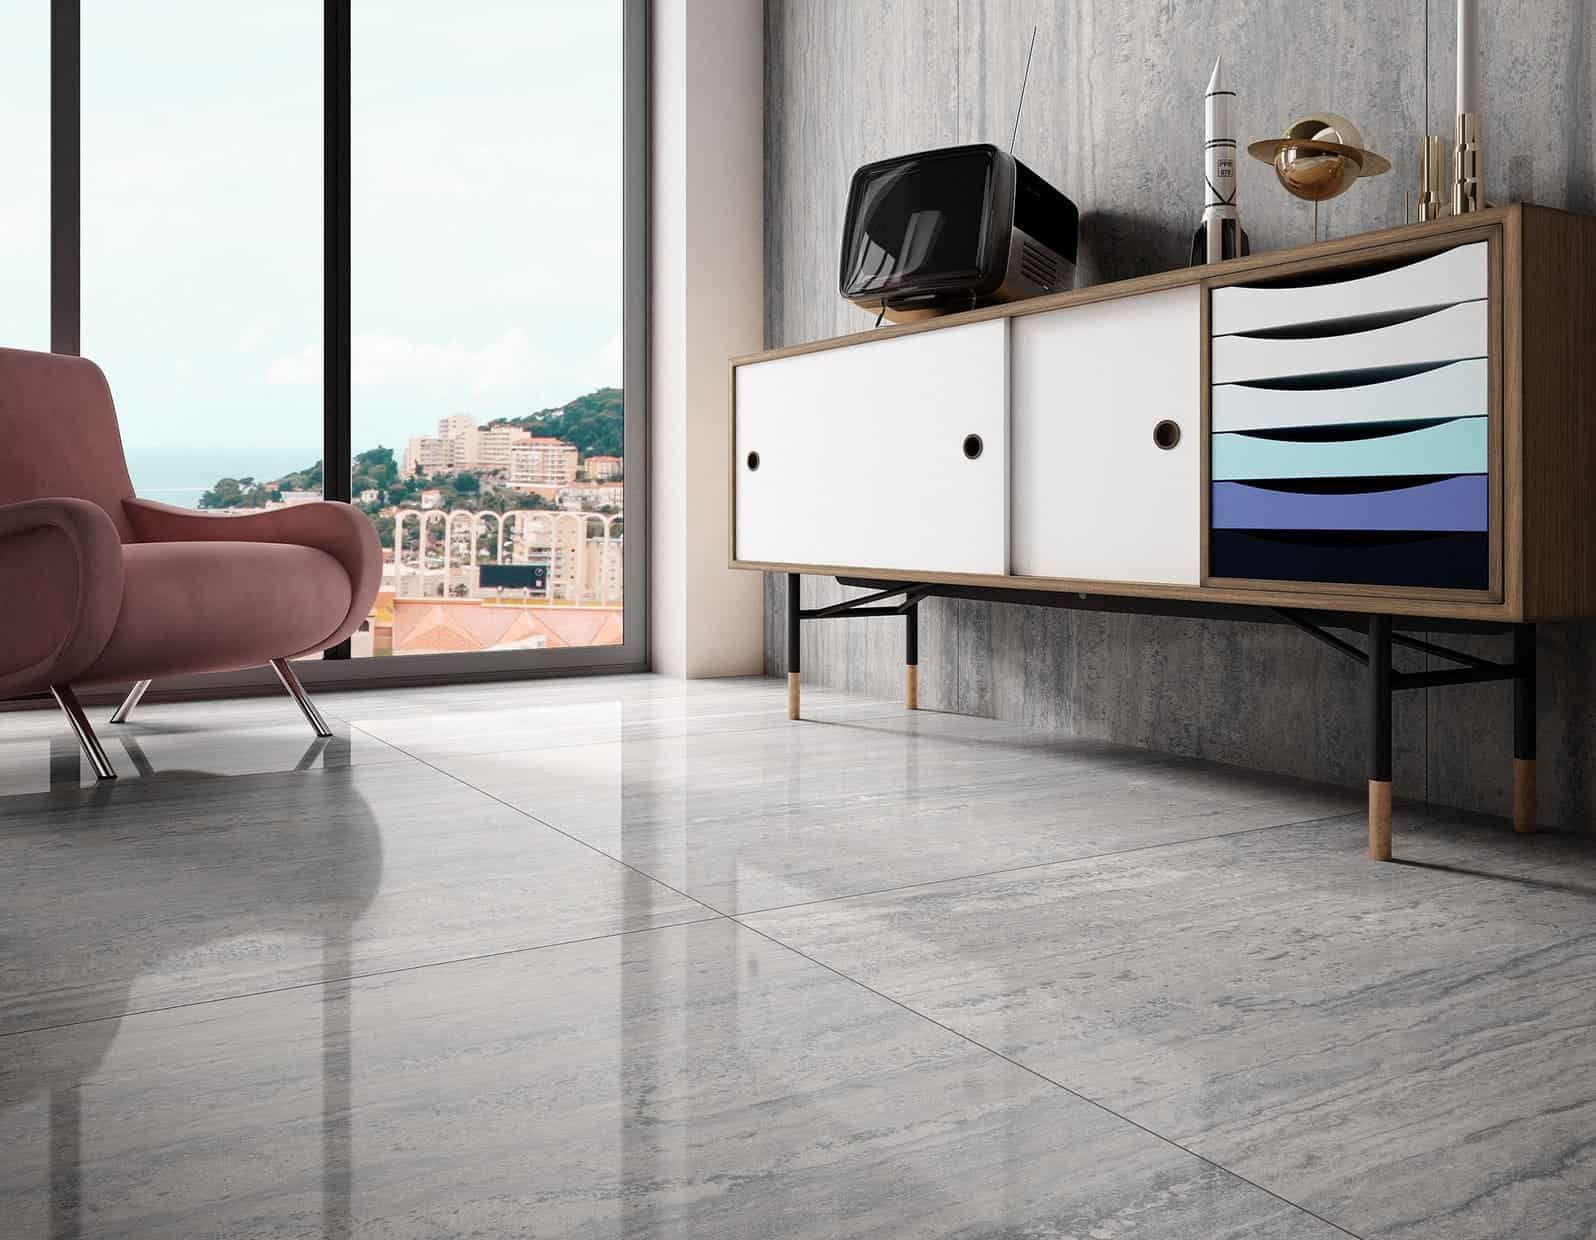 RAK Porcelain-tile Maximus Travertino luxury grey porcelain tiles for floor & kitchen slabs at lowest price.